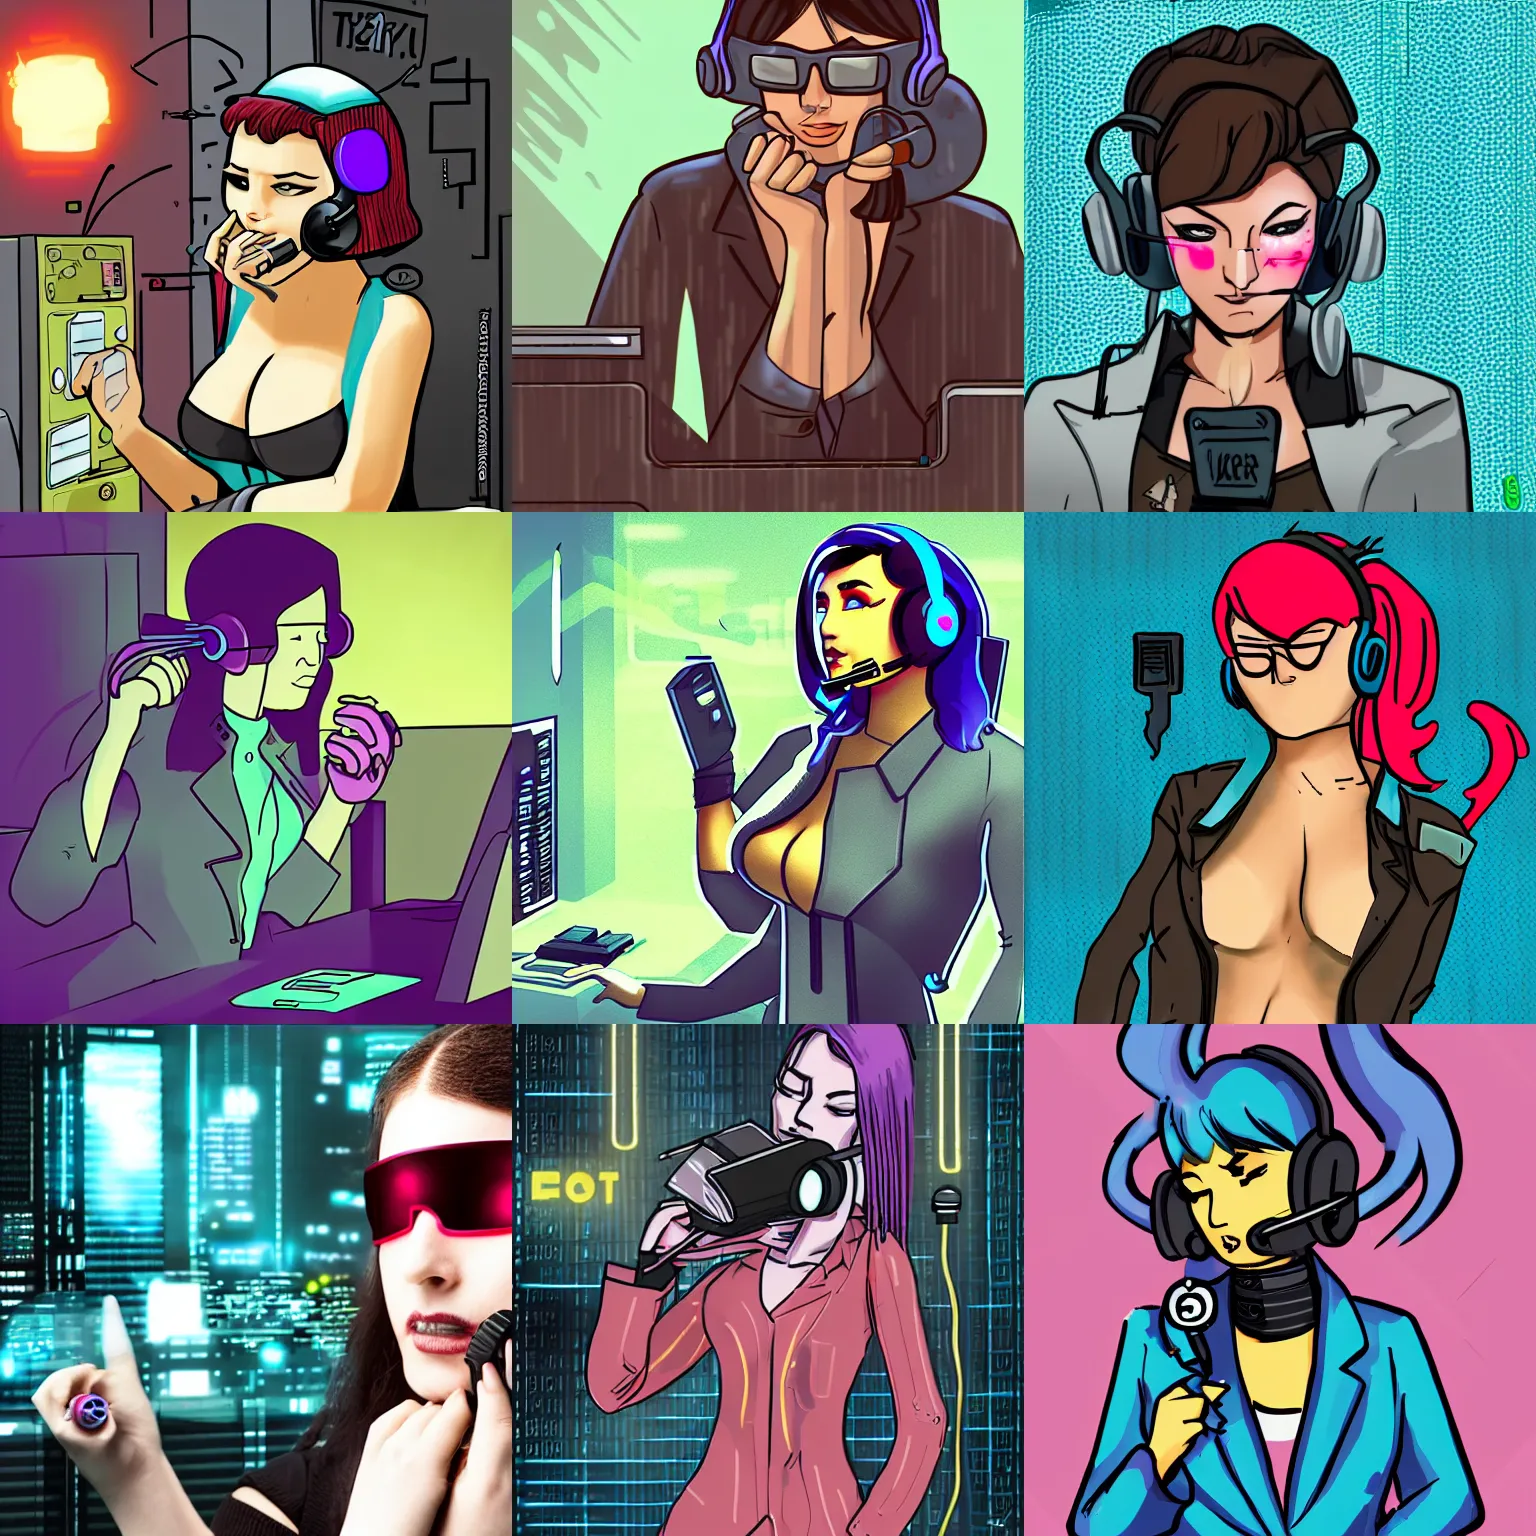 Prompt: steamy cyberpunk telemarketer girl